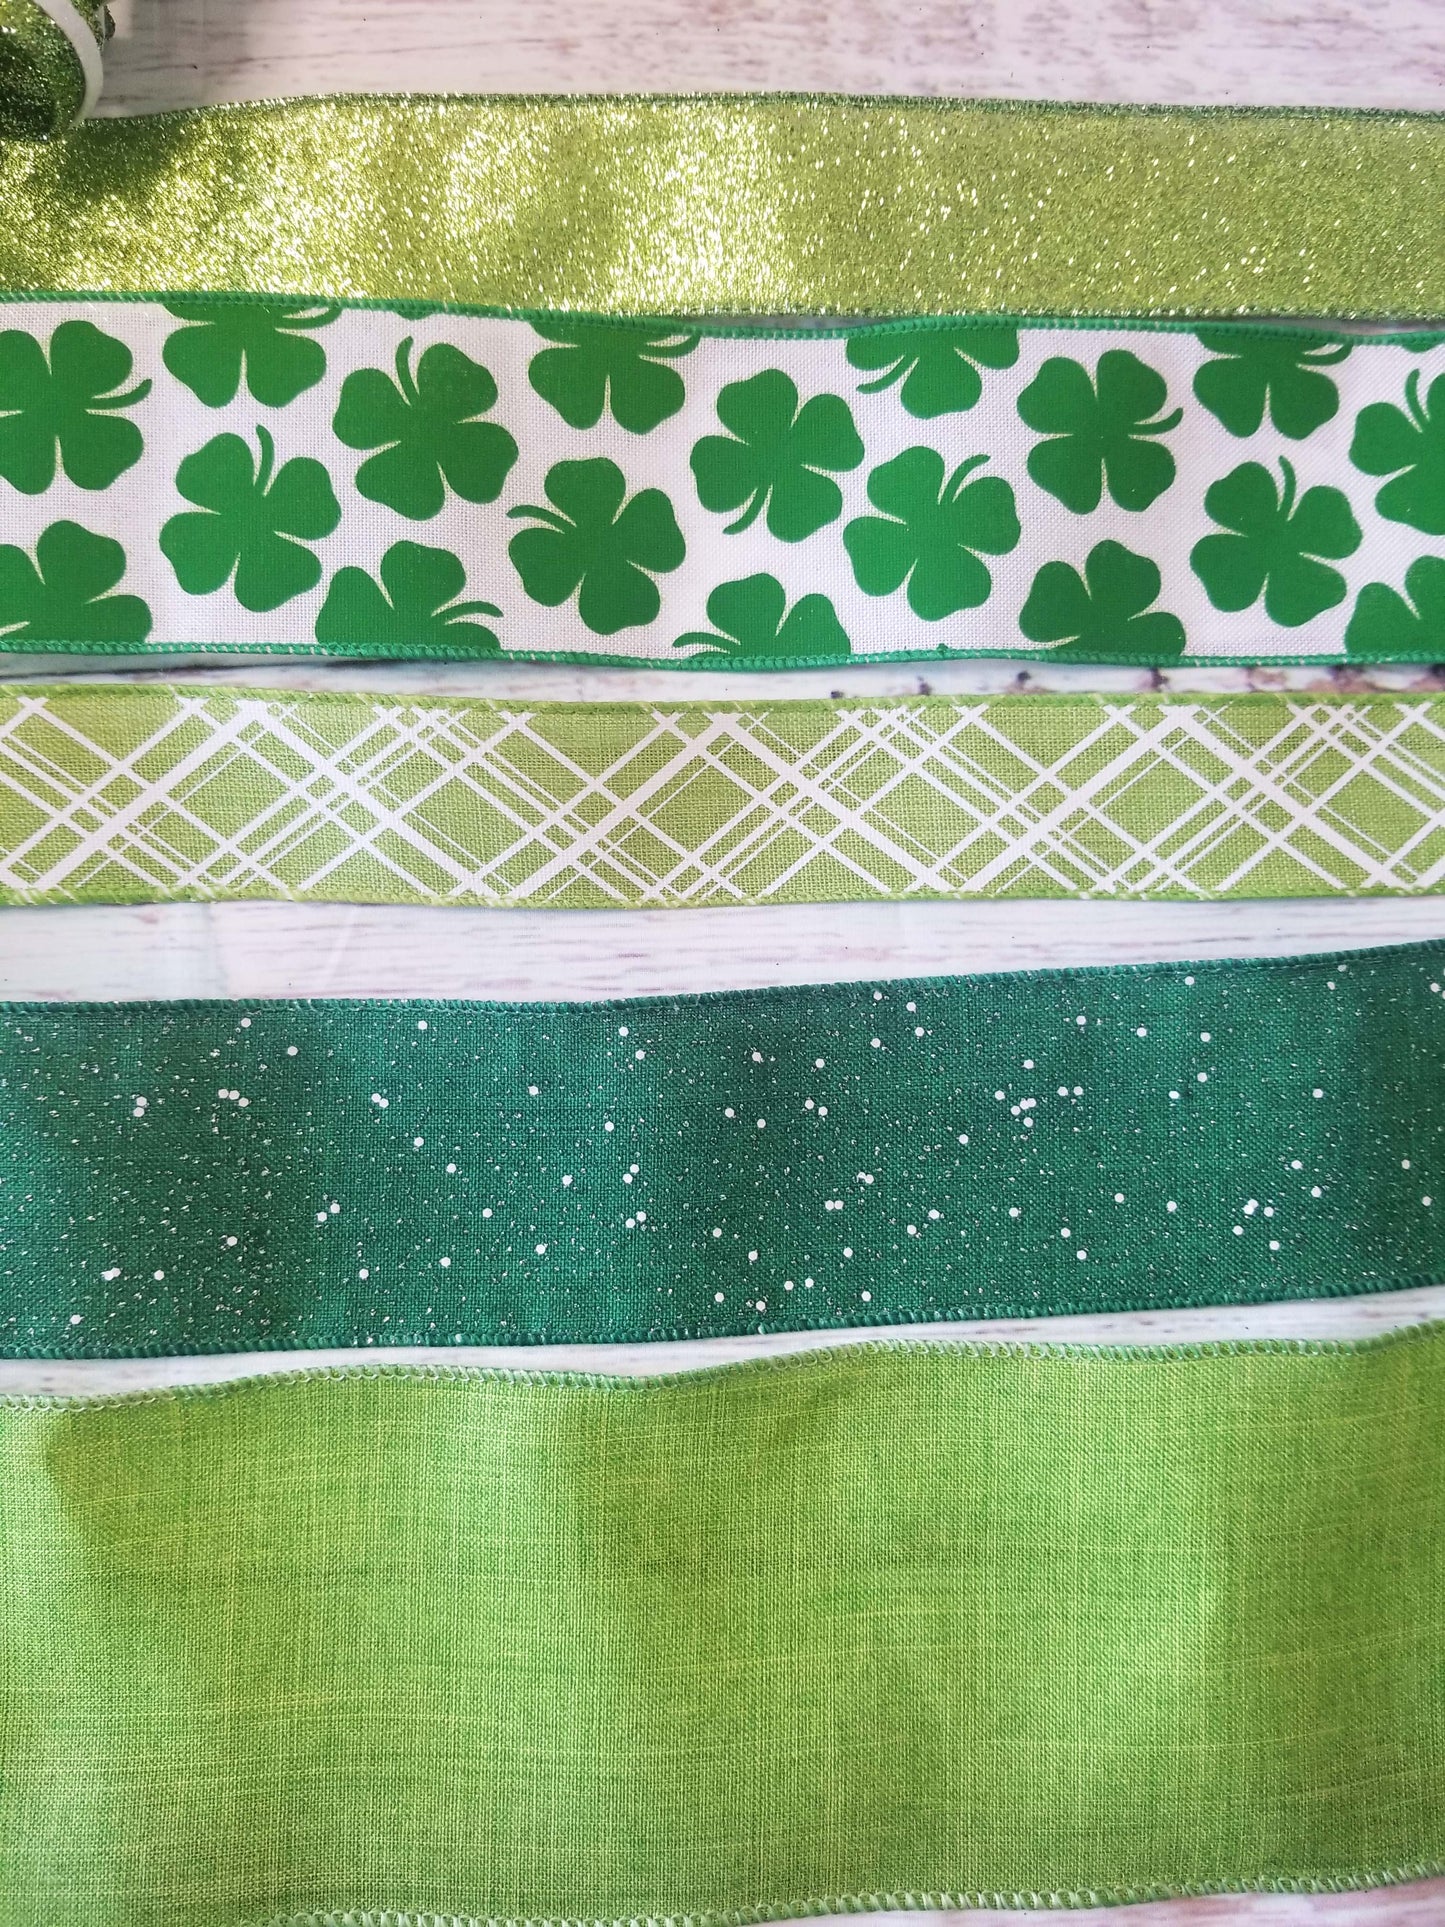 St. Patrick's Day Wreath Kit - Designer DIY